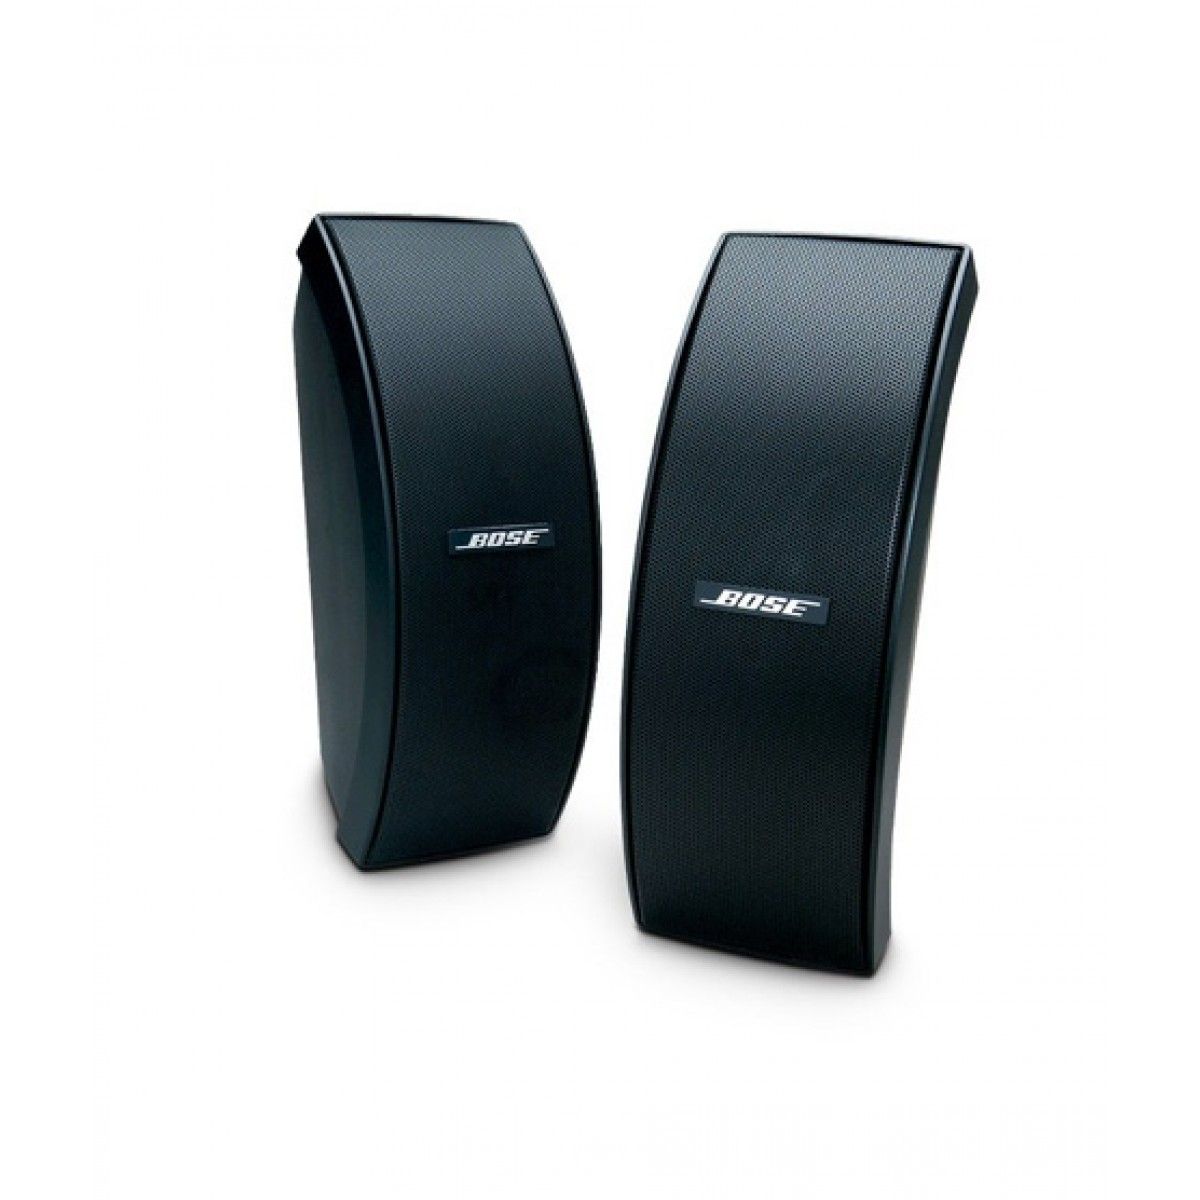 Bose 151 SE Environmental Outdoor Speakers